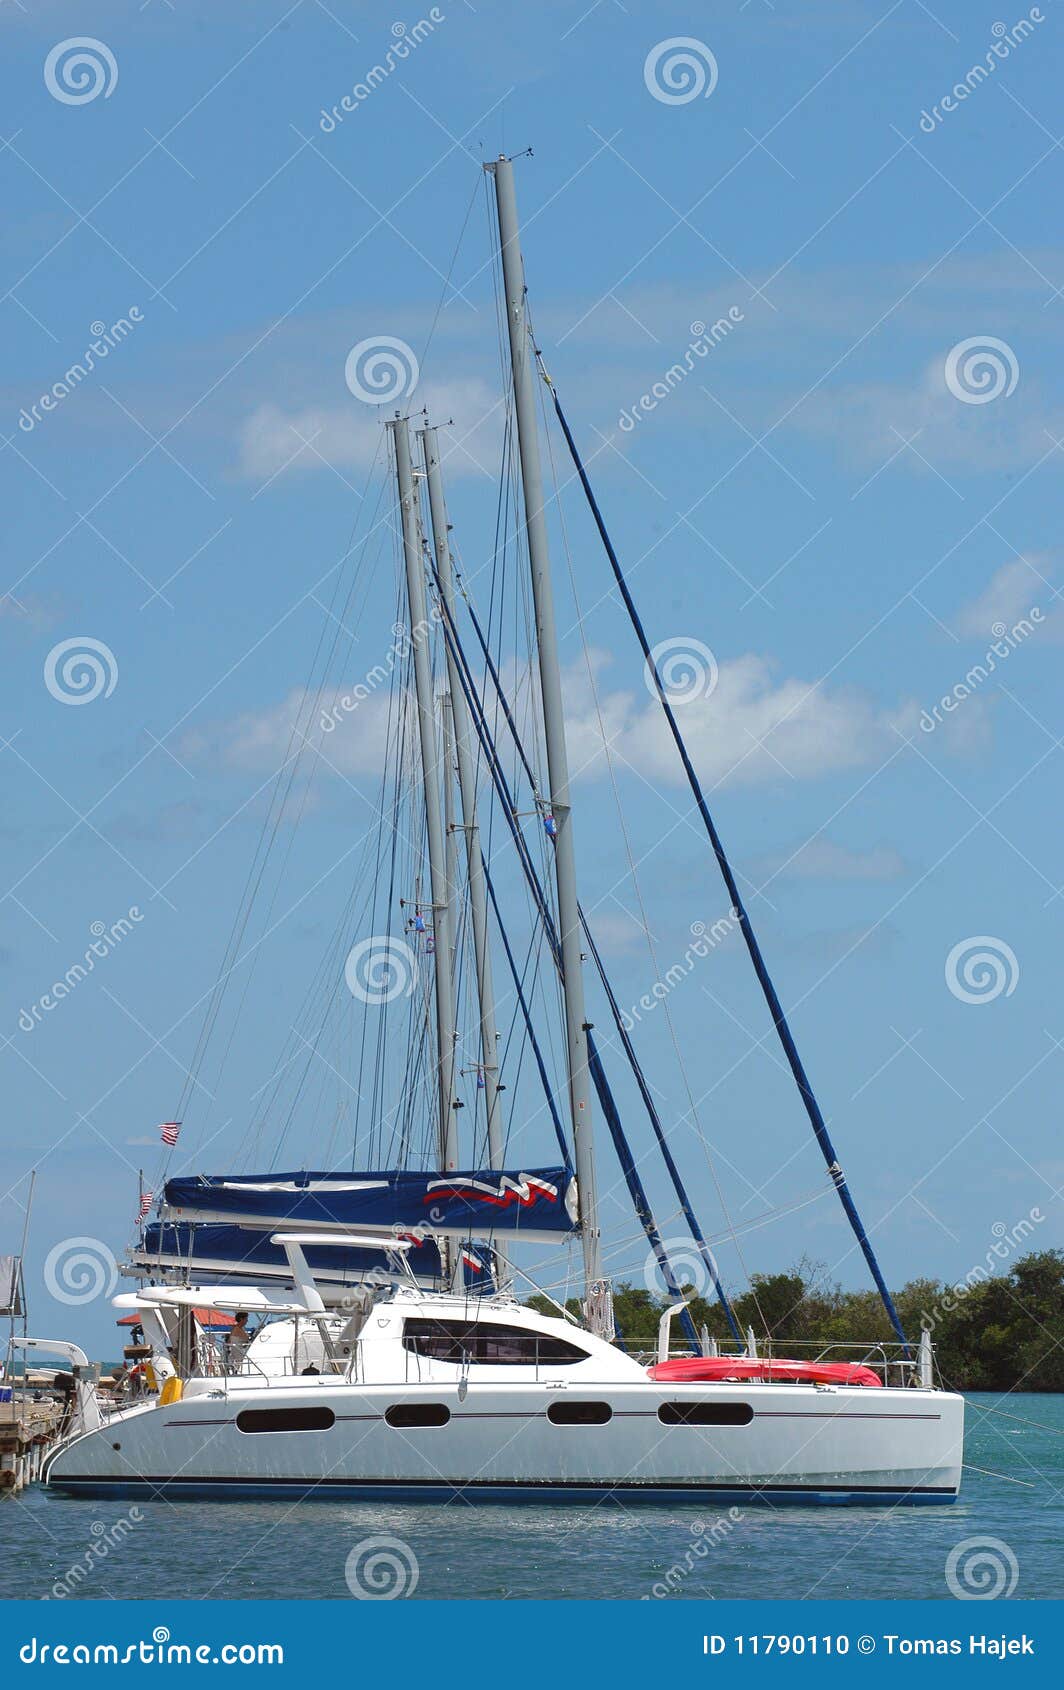 Yach stock photo. Image of lake, boat, sailboat, marooned - 11790110